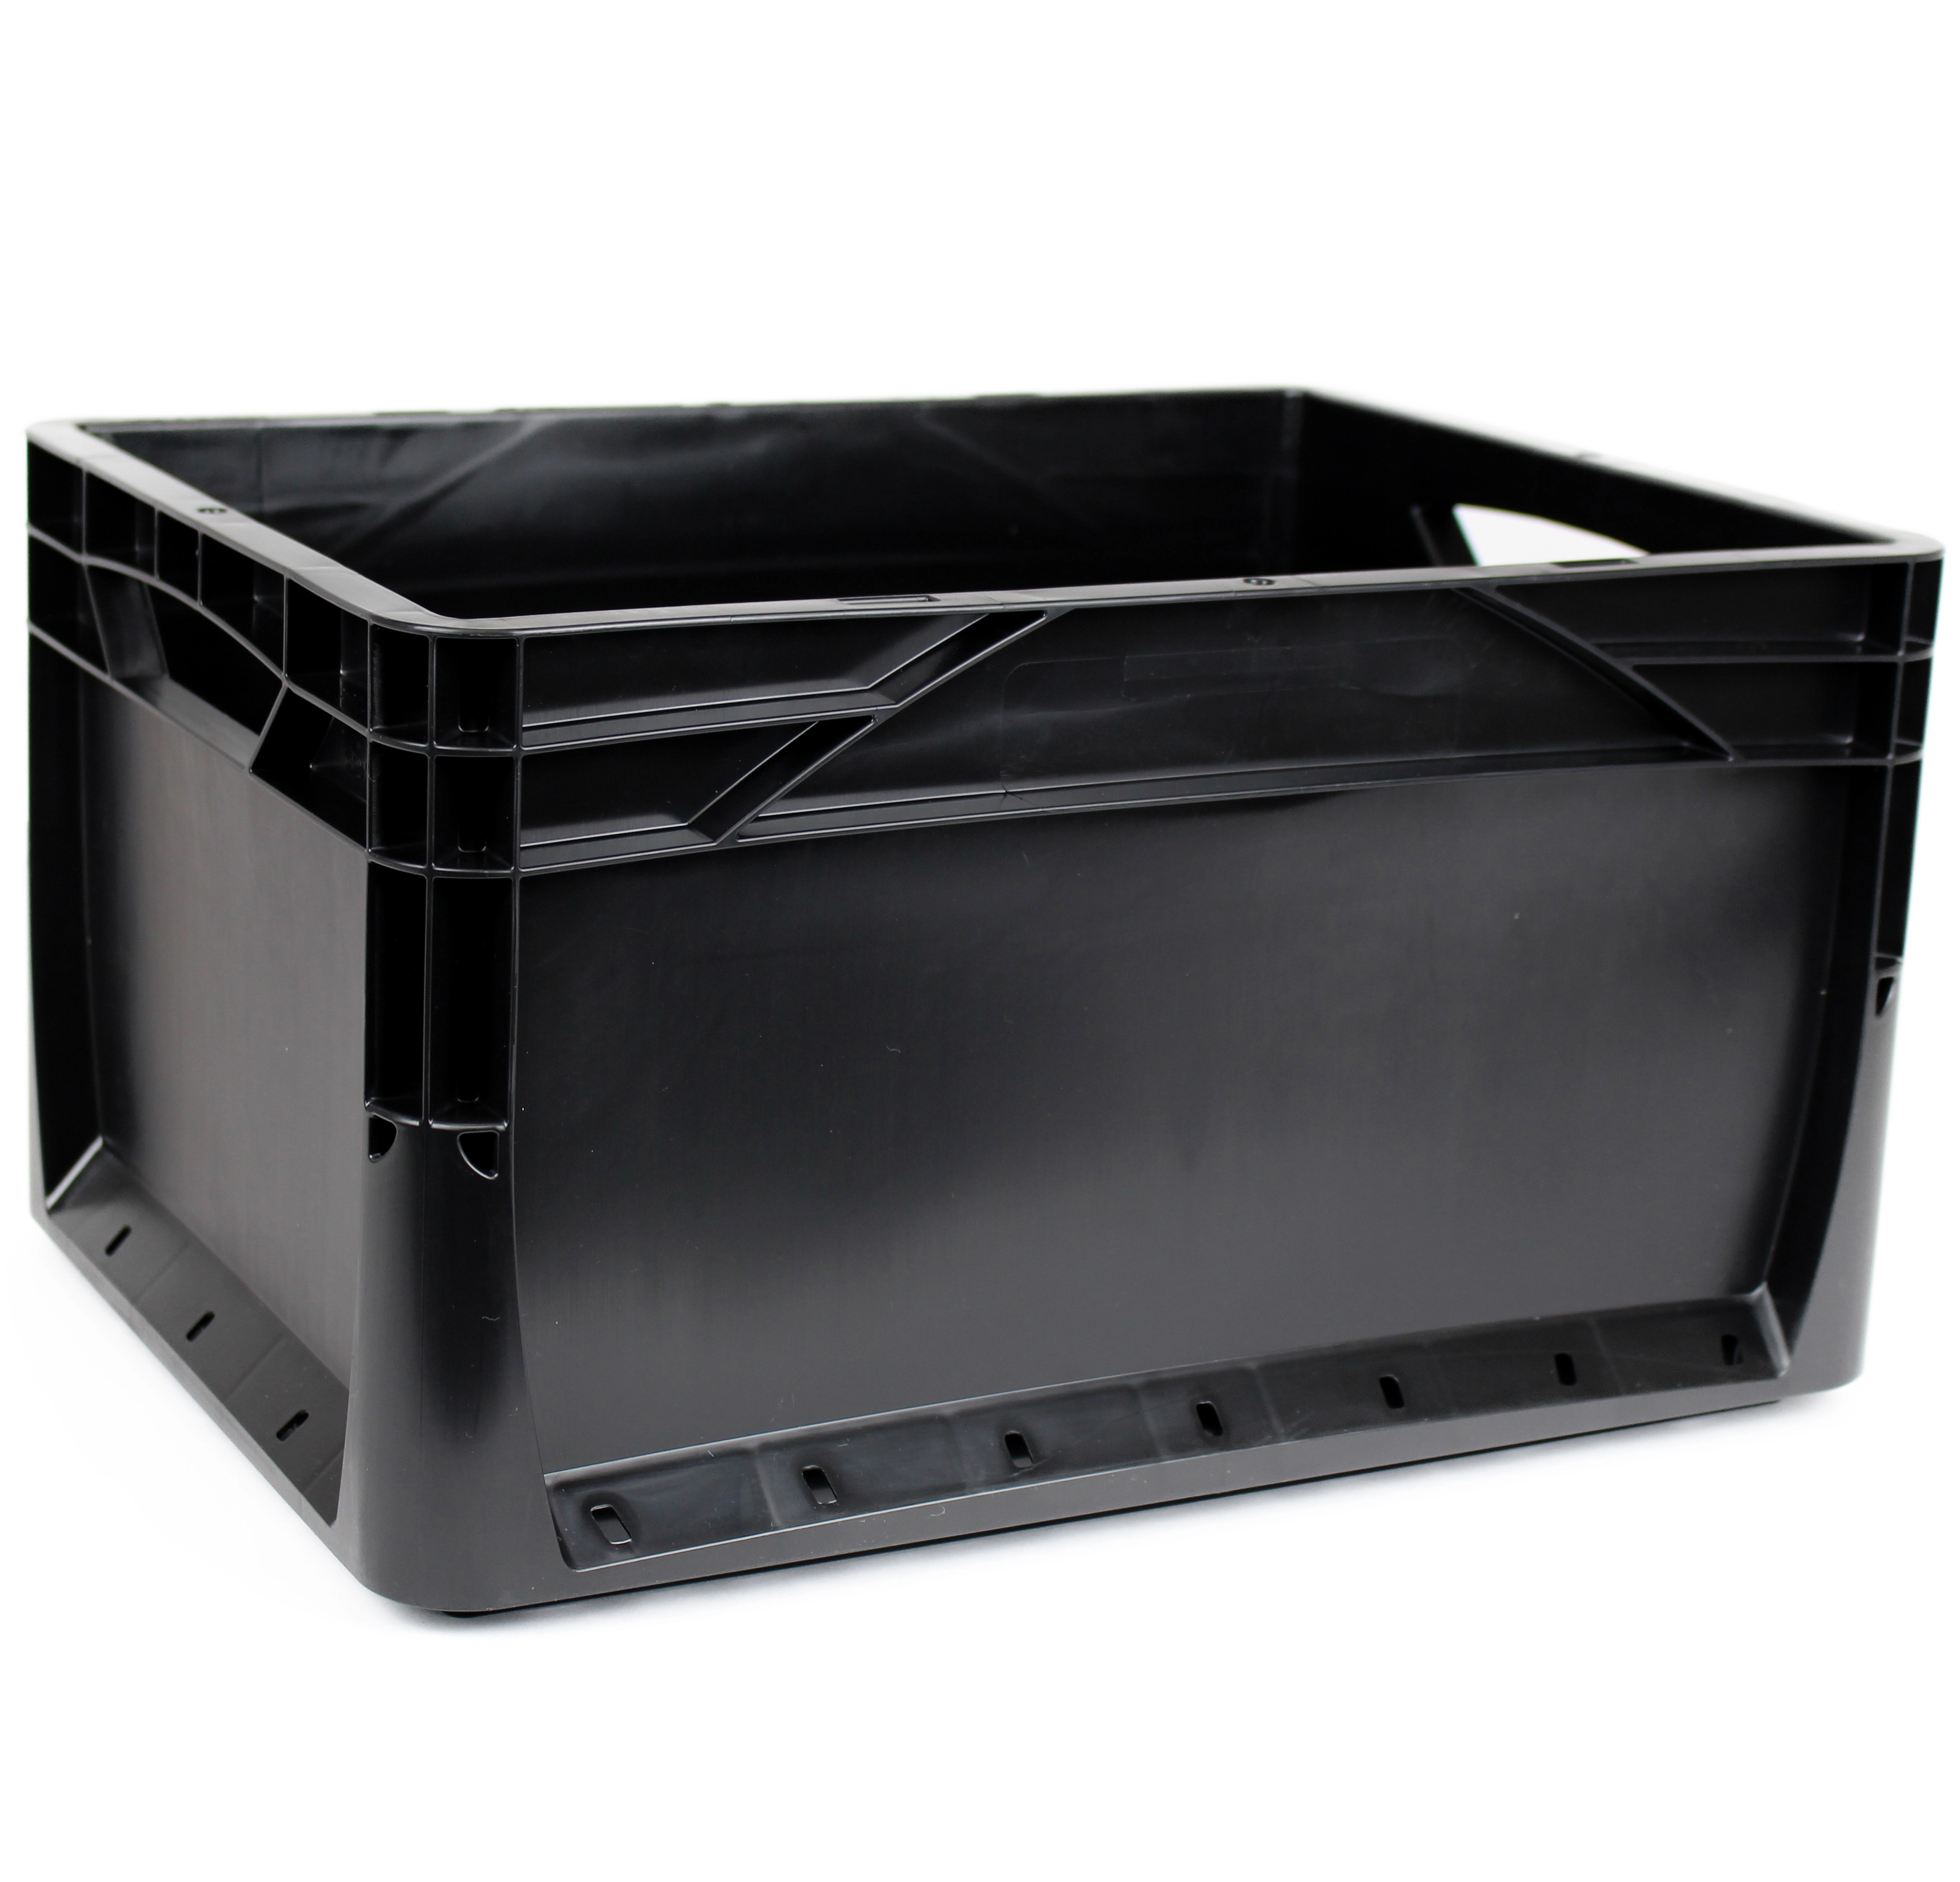 Eurobox-System Box Vollwand 40 x 30 x 22 cm Schwarz kaufen bei OBI